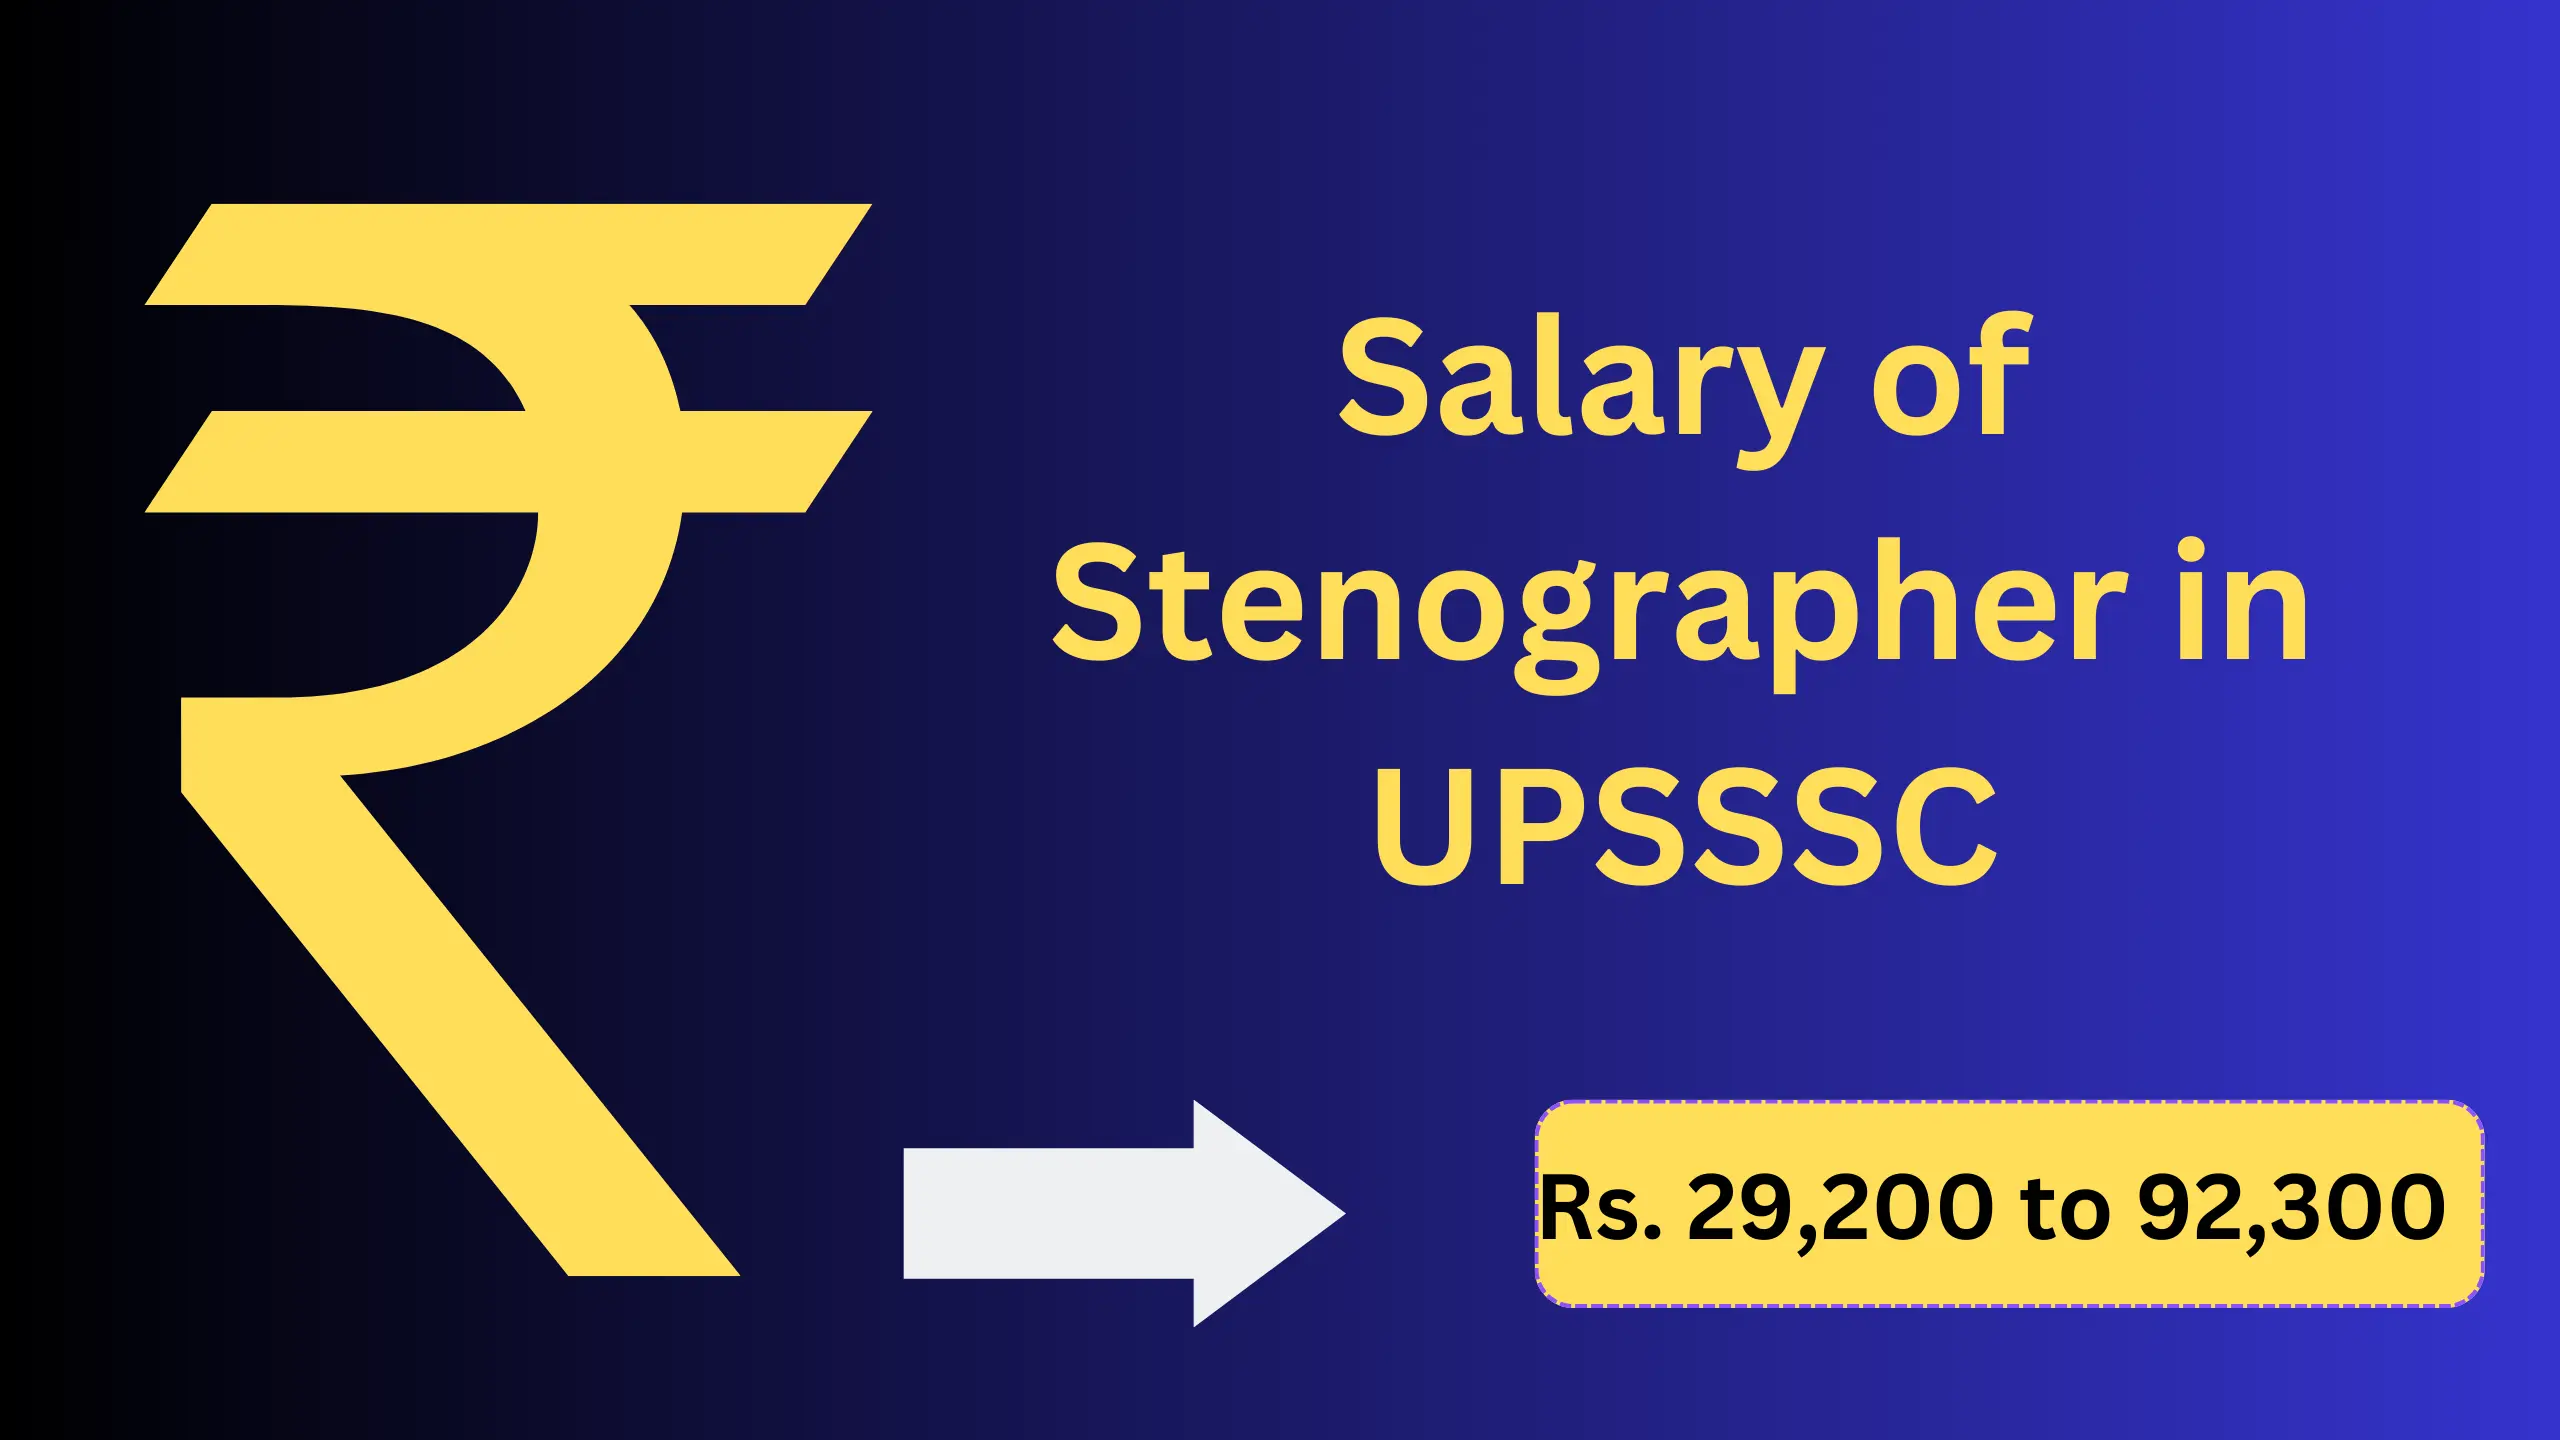 Salary of Stenographer in UPSSSC